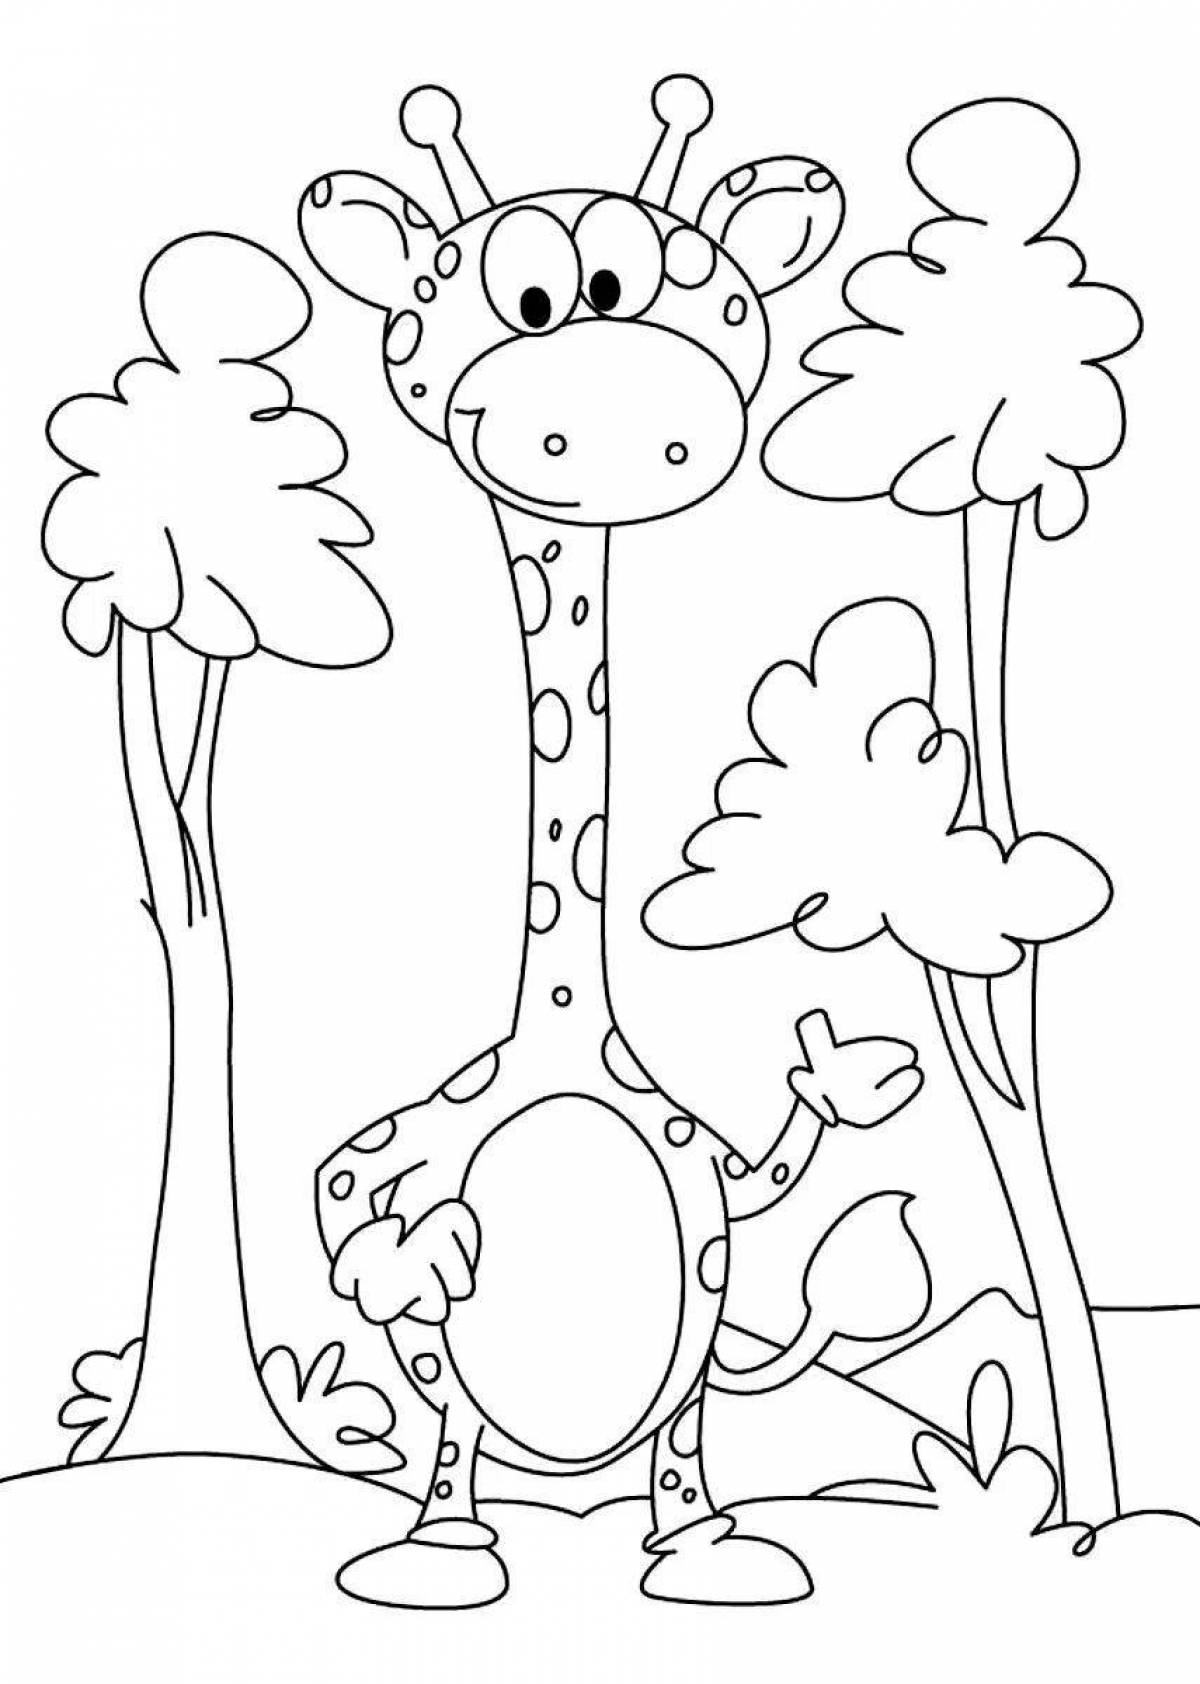 Impressive giraffe coloring book for kids